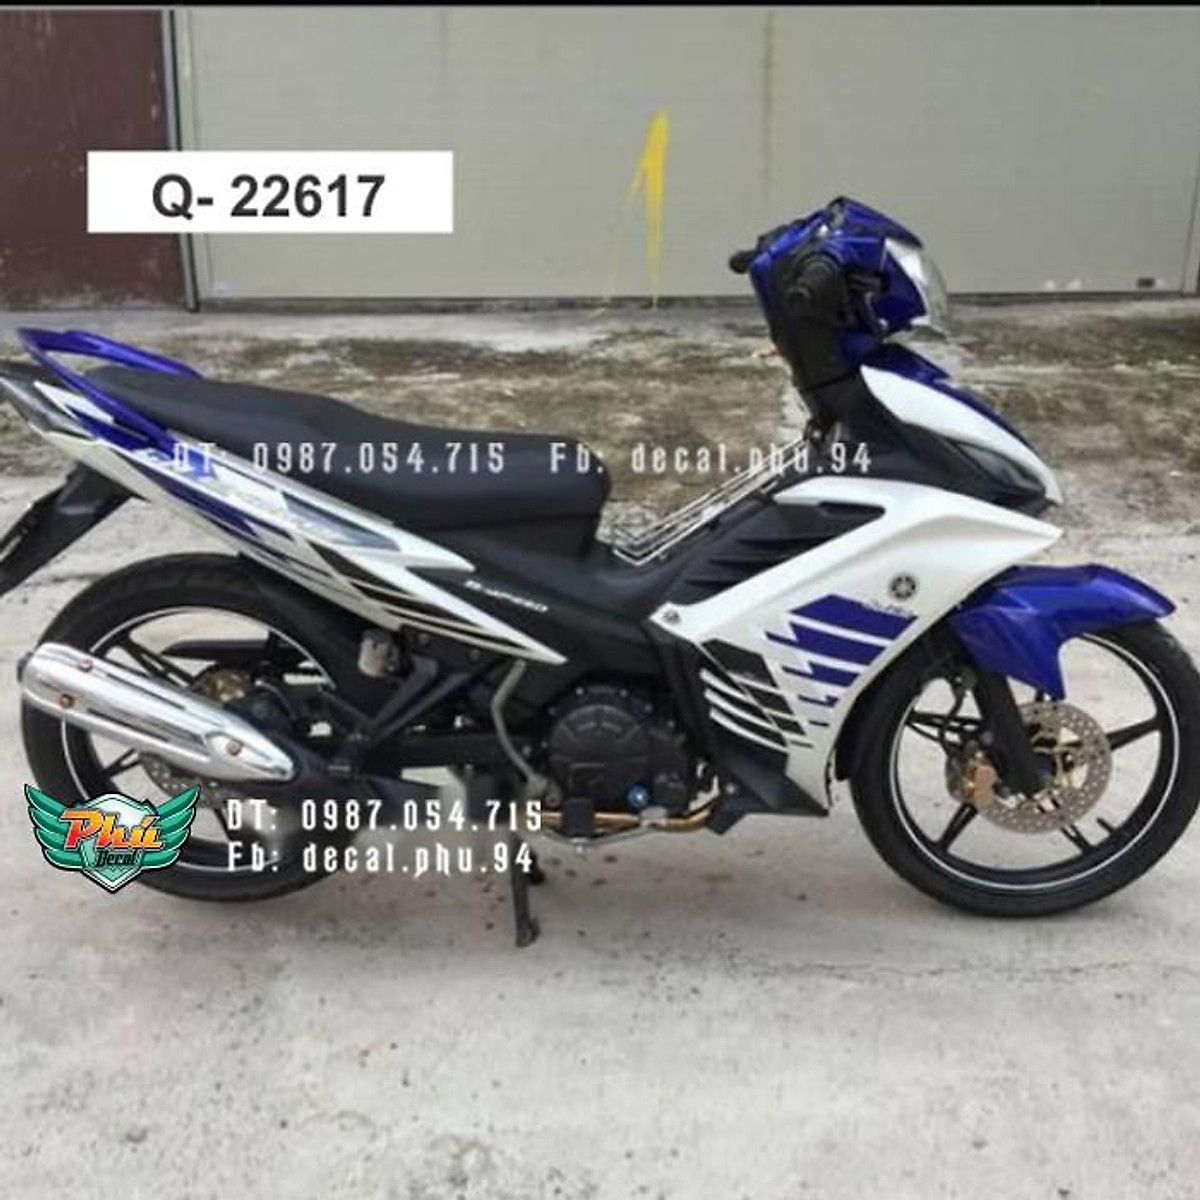 Xe Yamaha Exciter 150 giá bao nhiêu